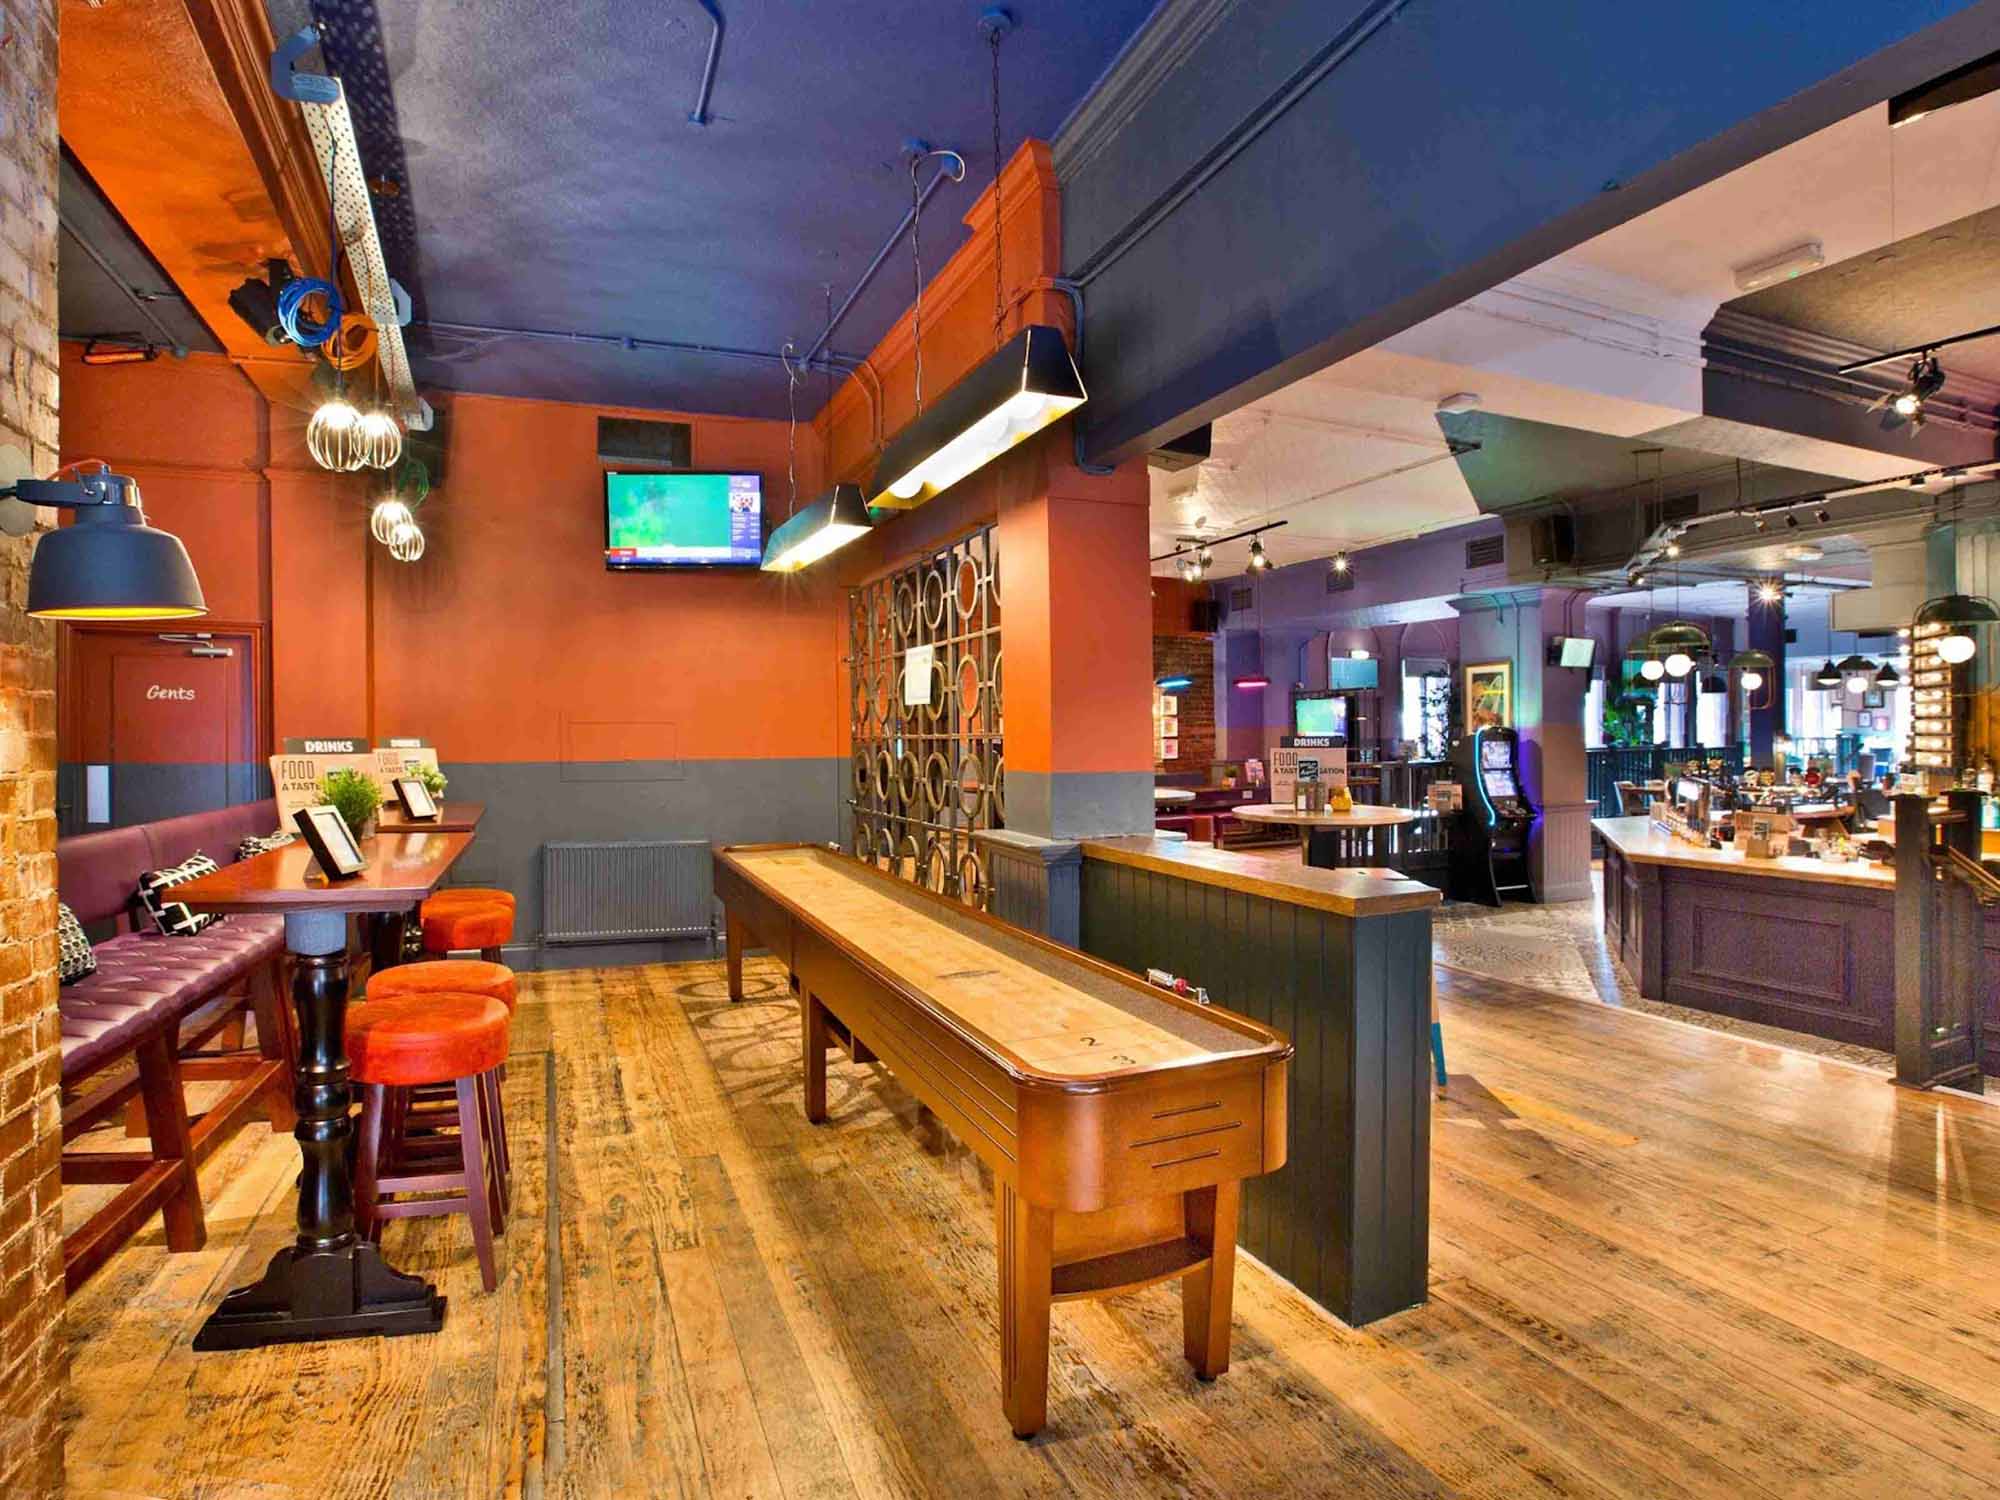 The Gosta Green - Best Bars in Birmingham